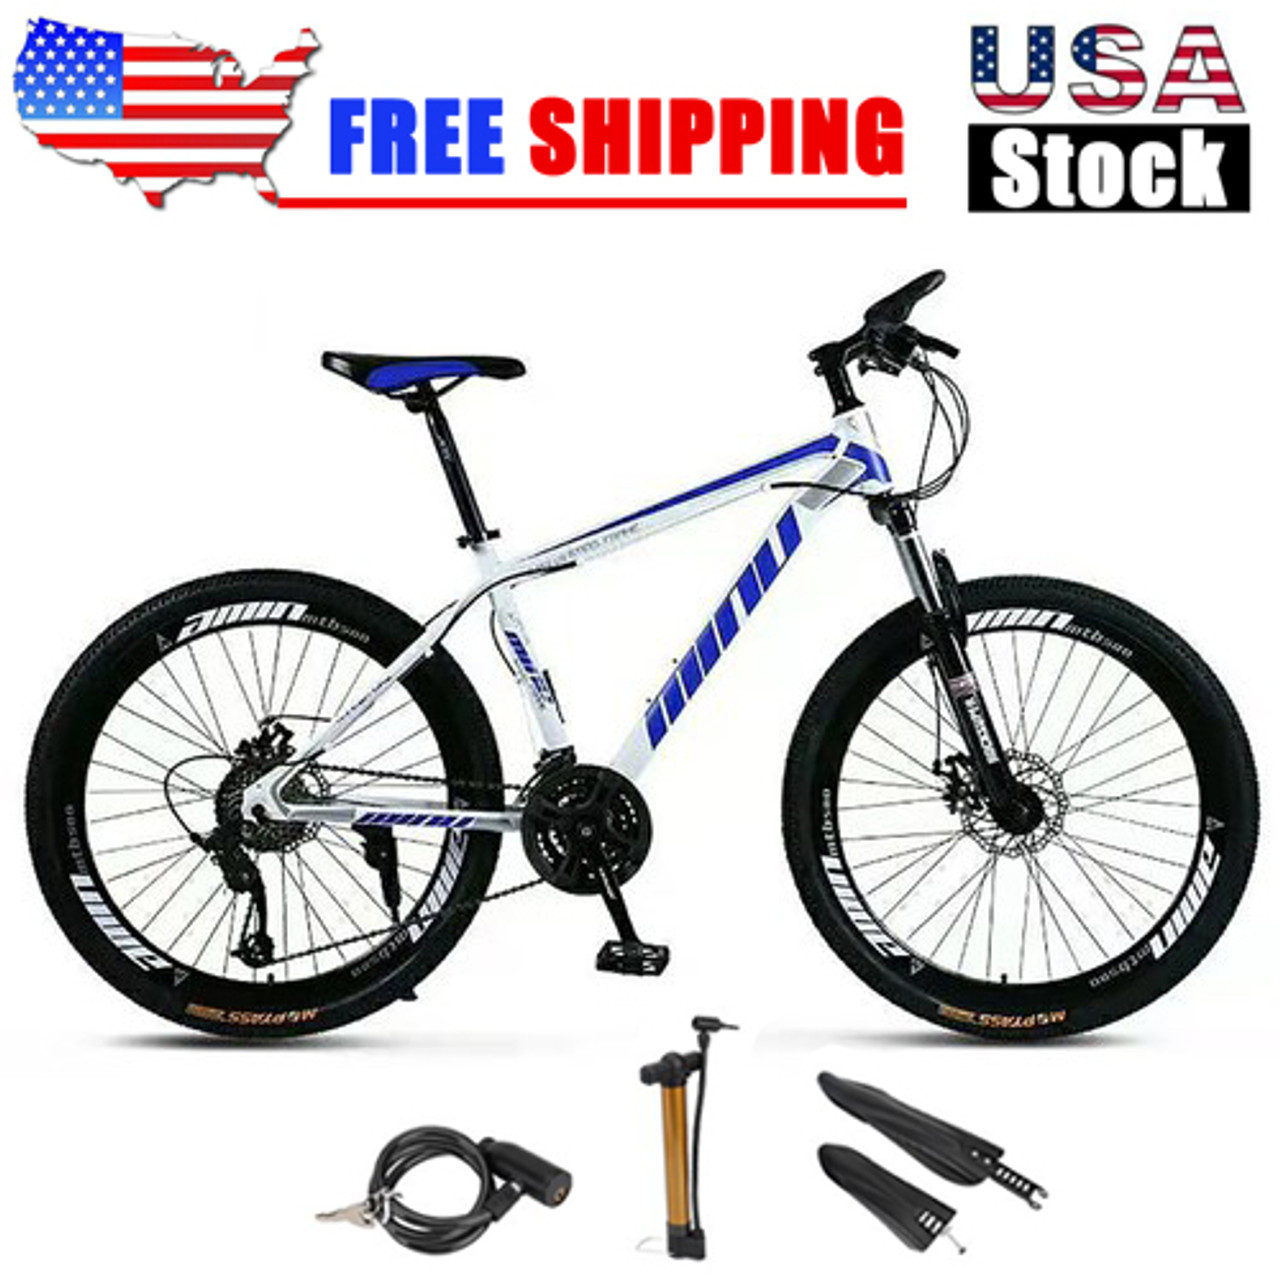 Mountain Bike 26 inch Wheels 21 Speed Bicycle Disc Bicycles Bike+Lock+Air Pump White+Blue